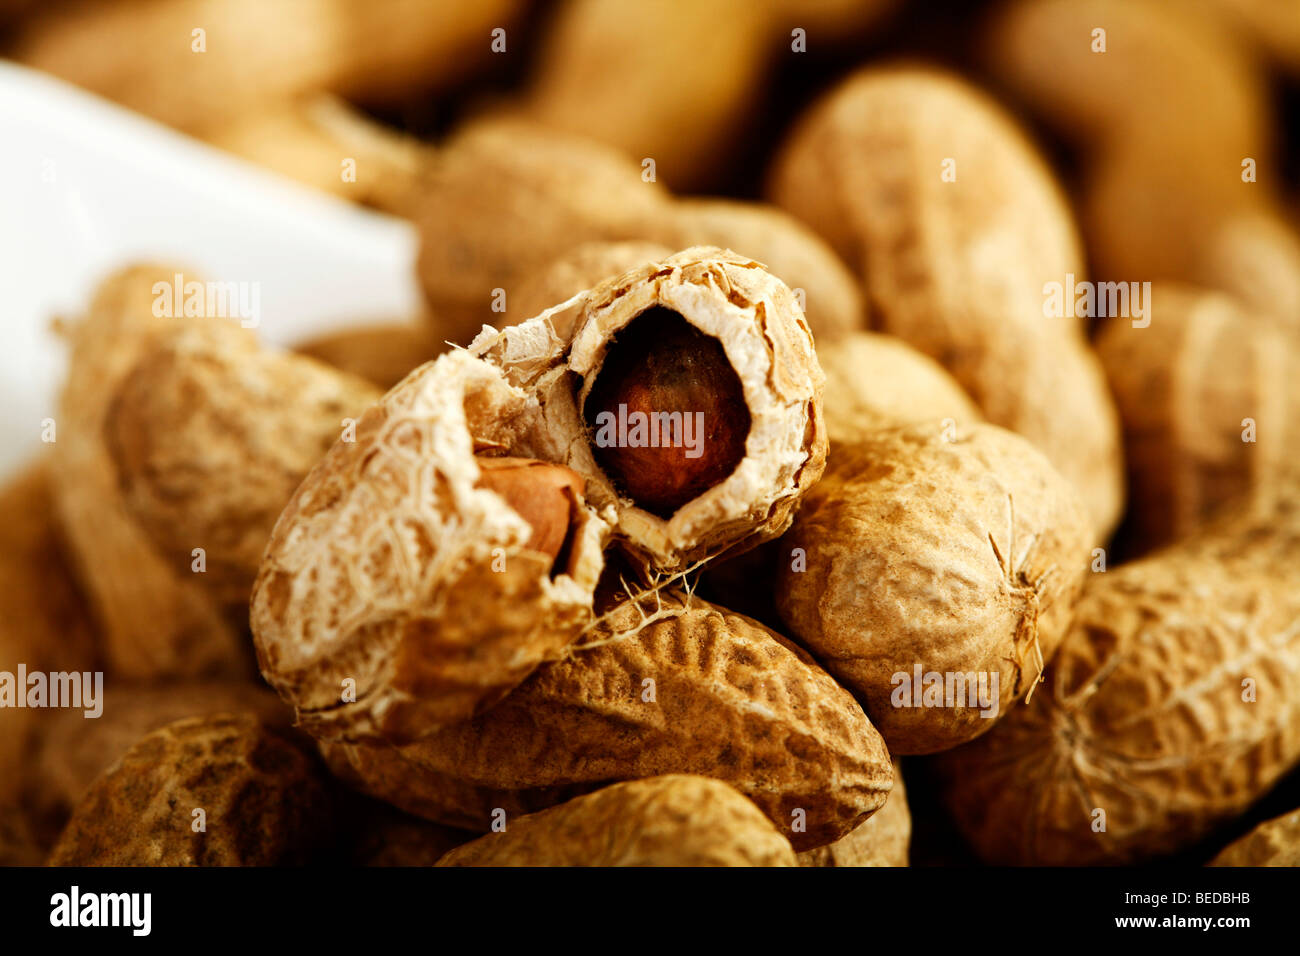 Halved peanut Stock Photo